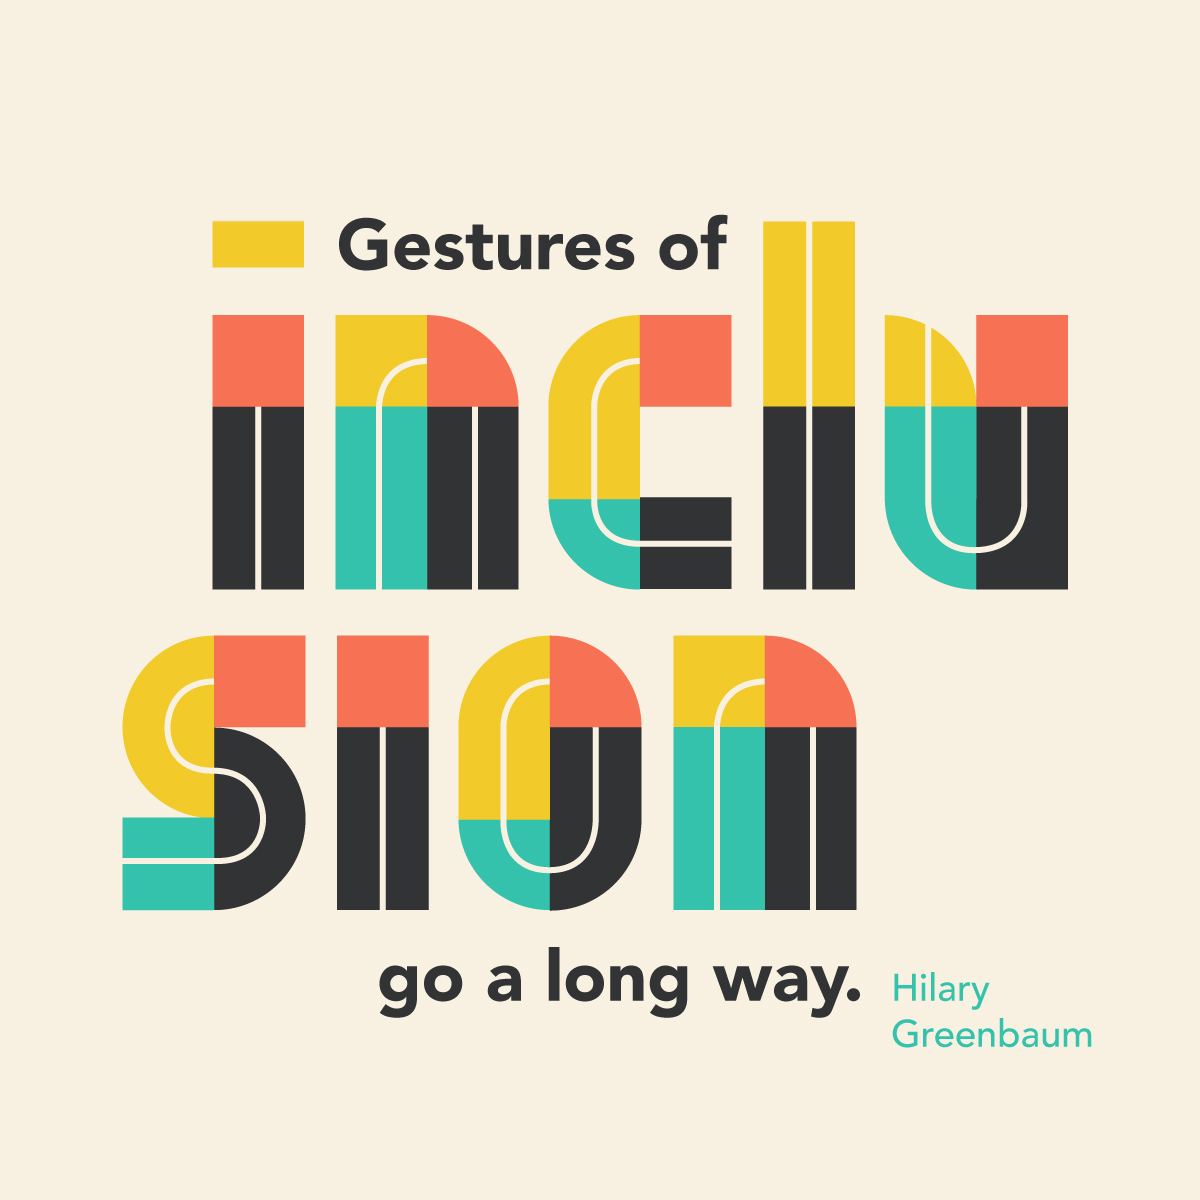 "Gestures of inclusion go a long way." Hilary Greenbaum